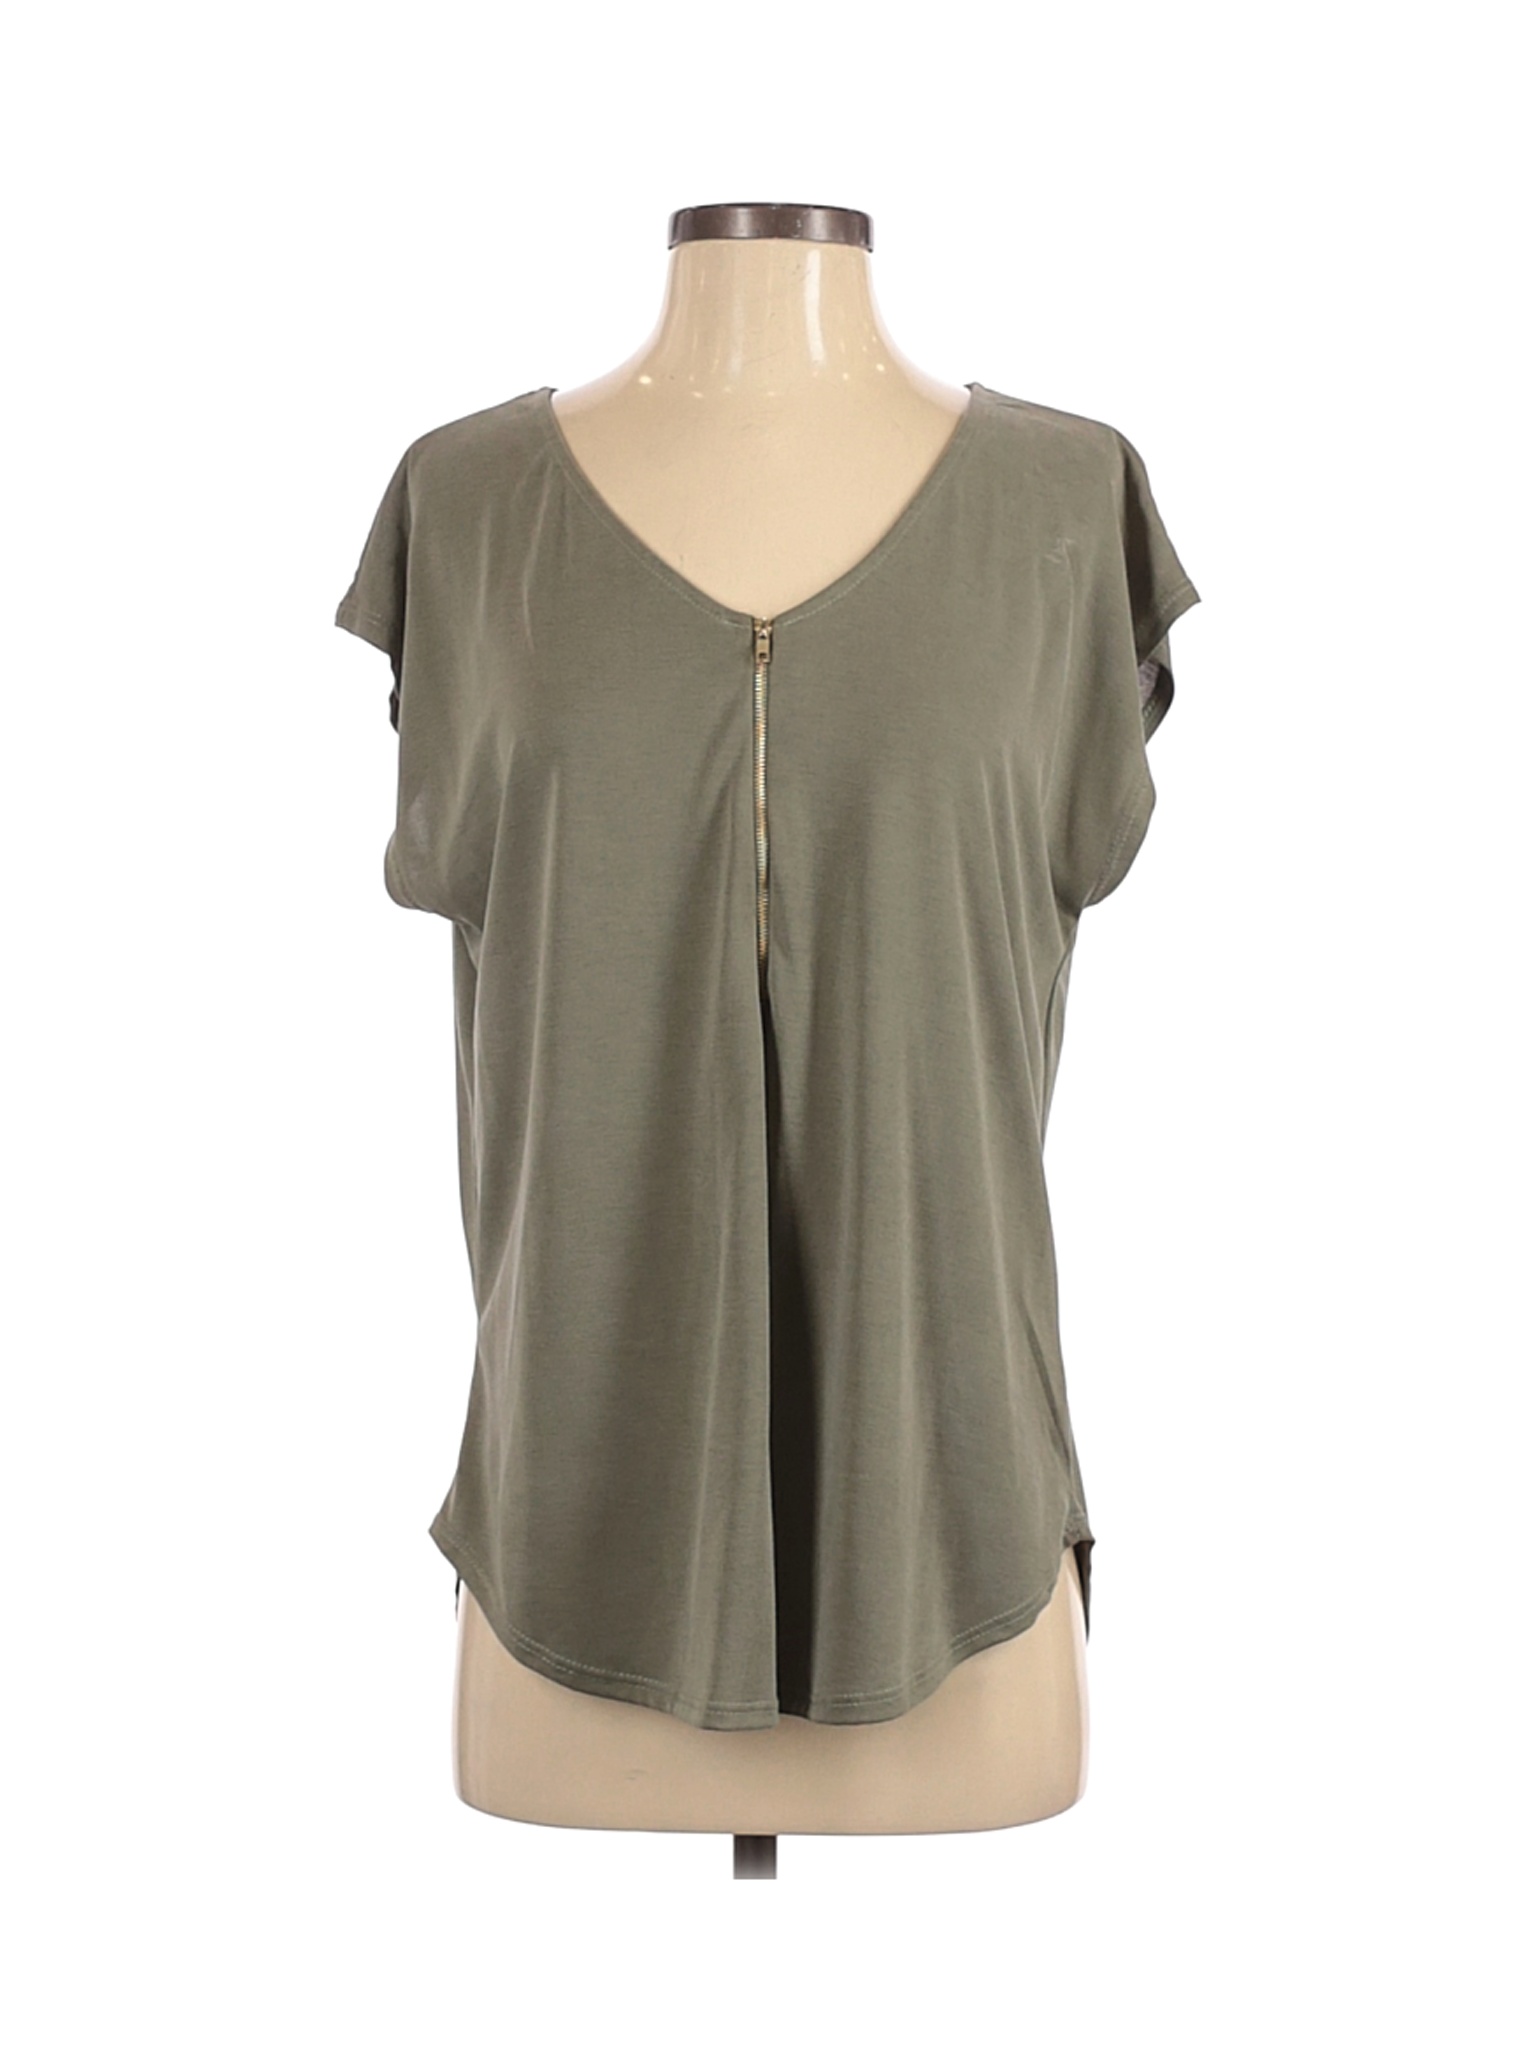 NWT Green Envelope Women Green Short Sleeve Top M | eBay